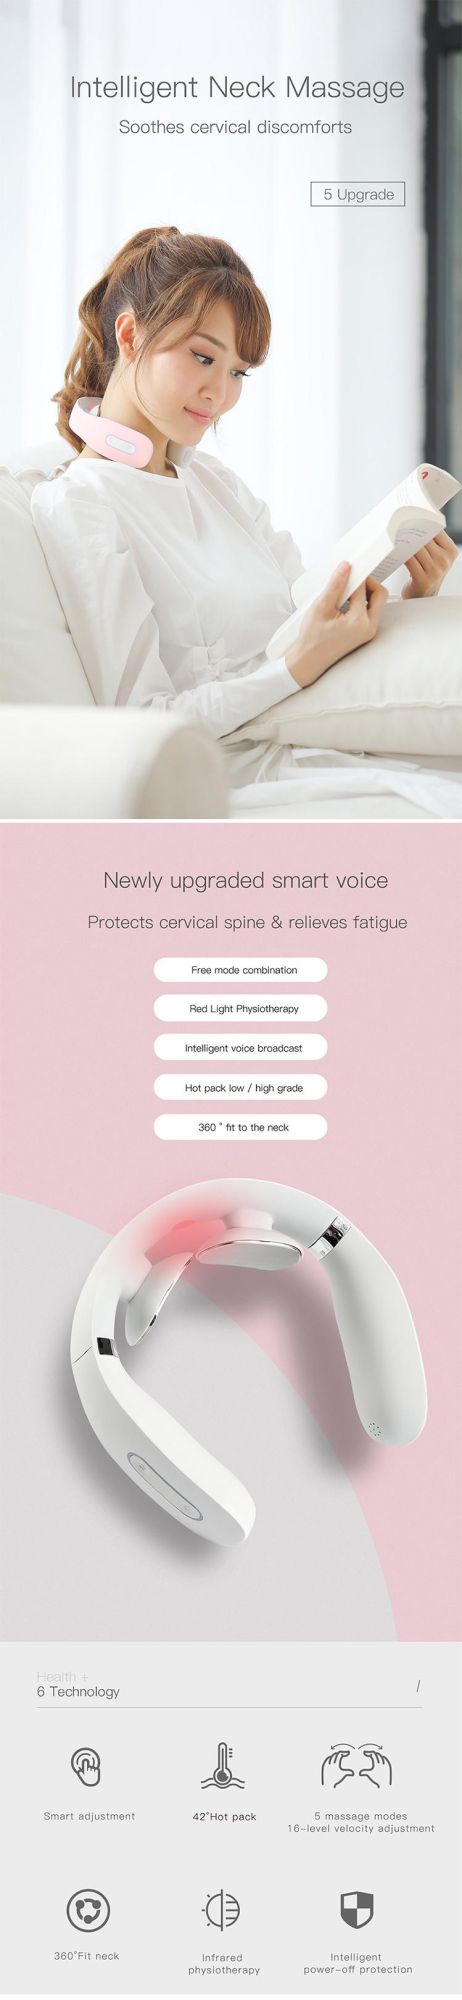 2020 Portable Electric Massage Device Neck Massager